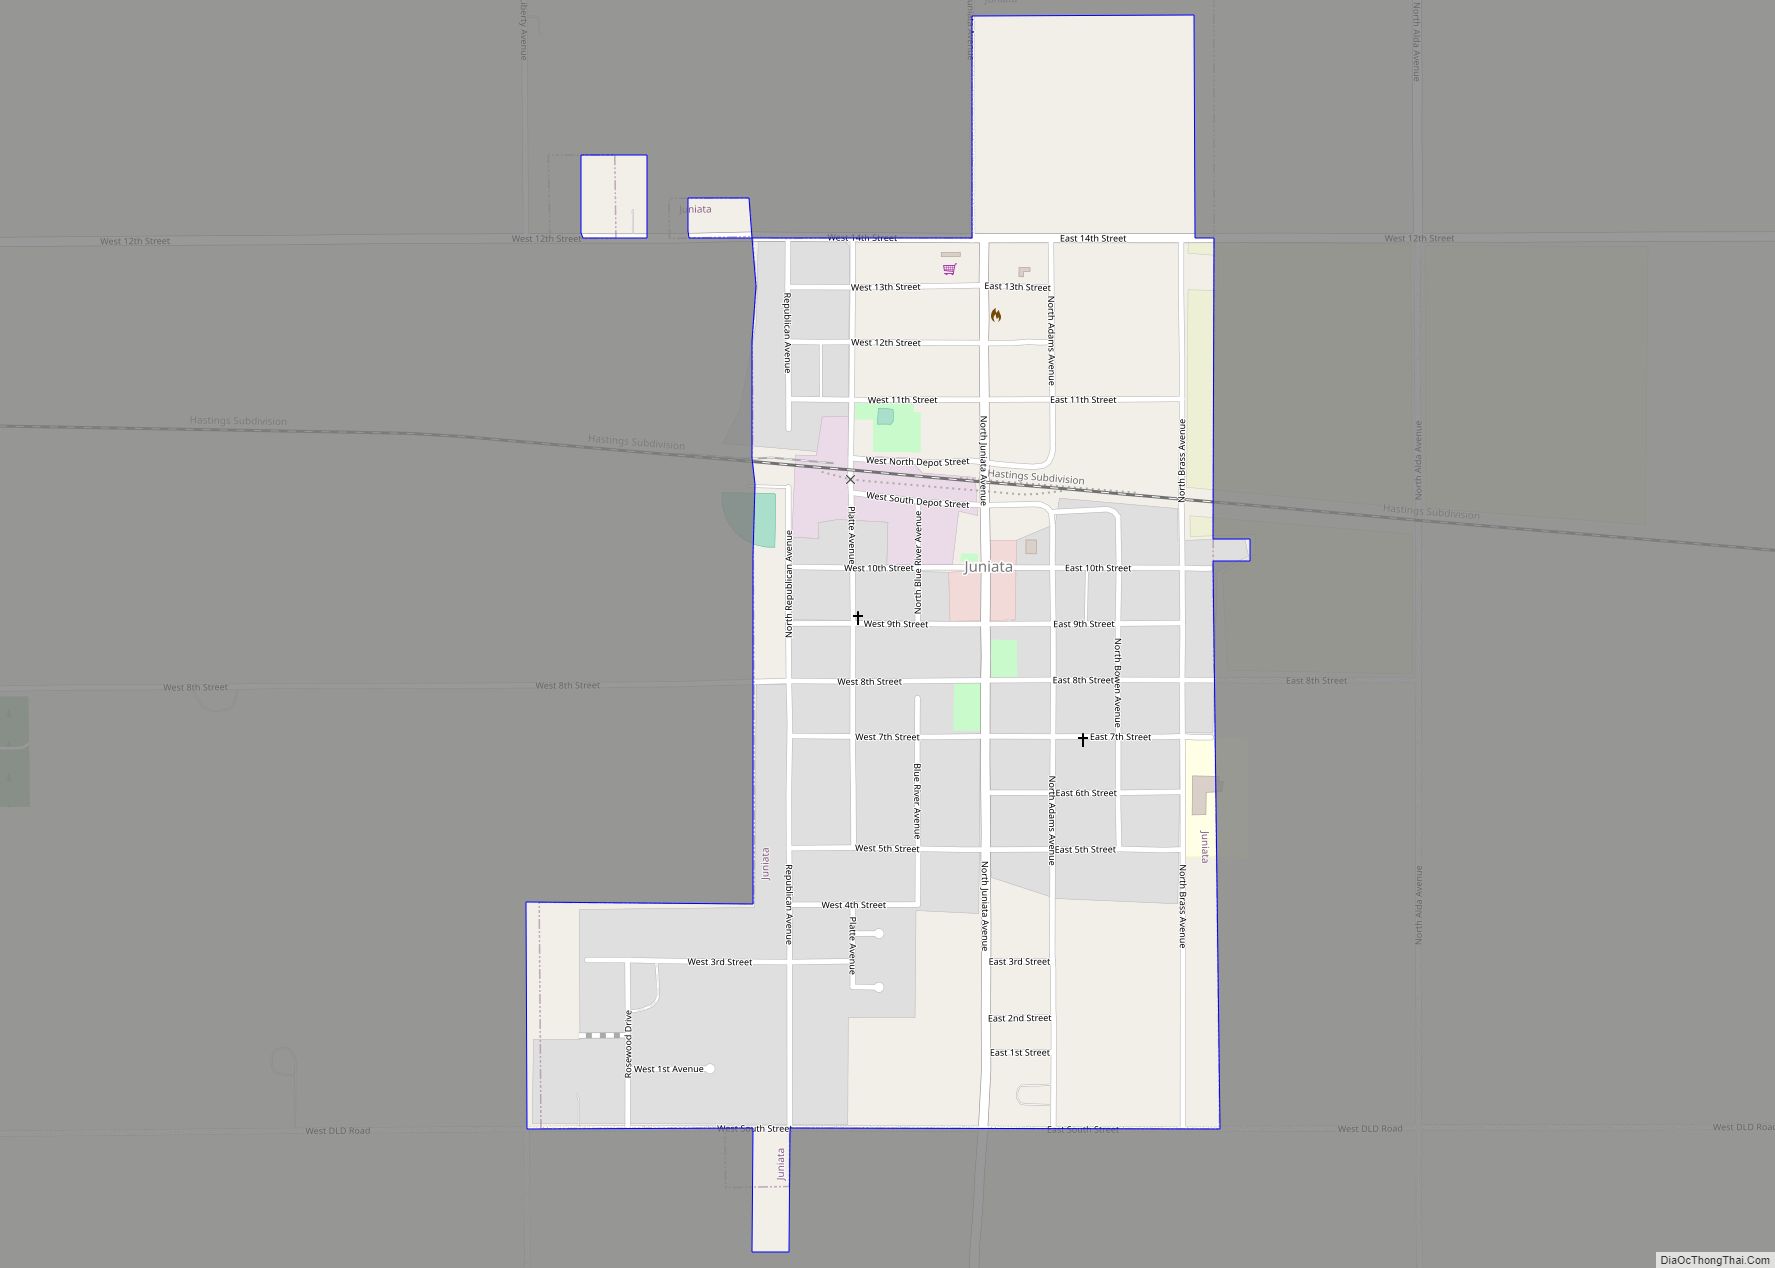 Map of Juniata village